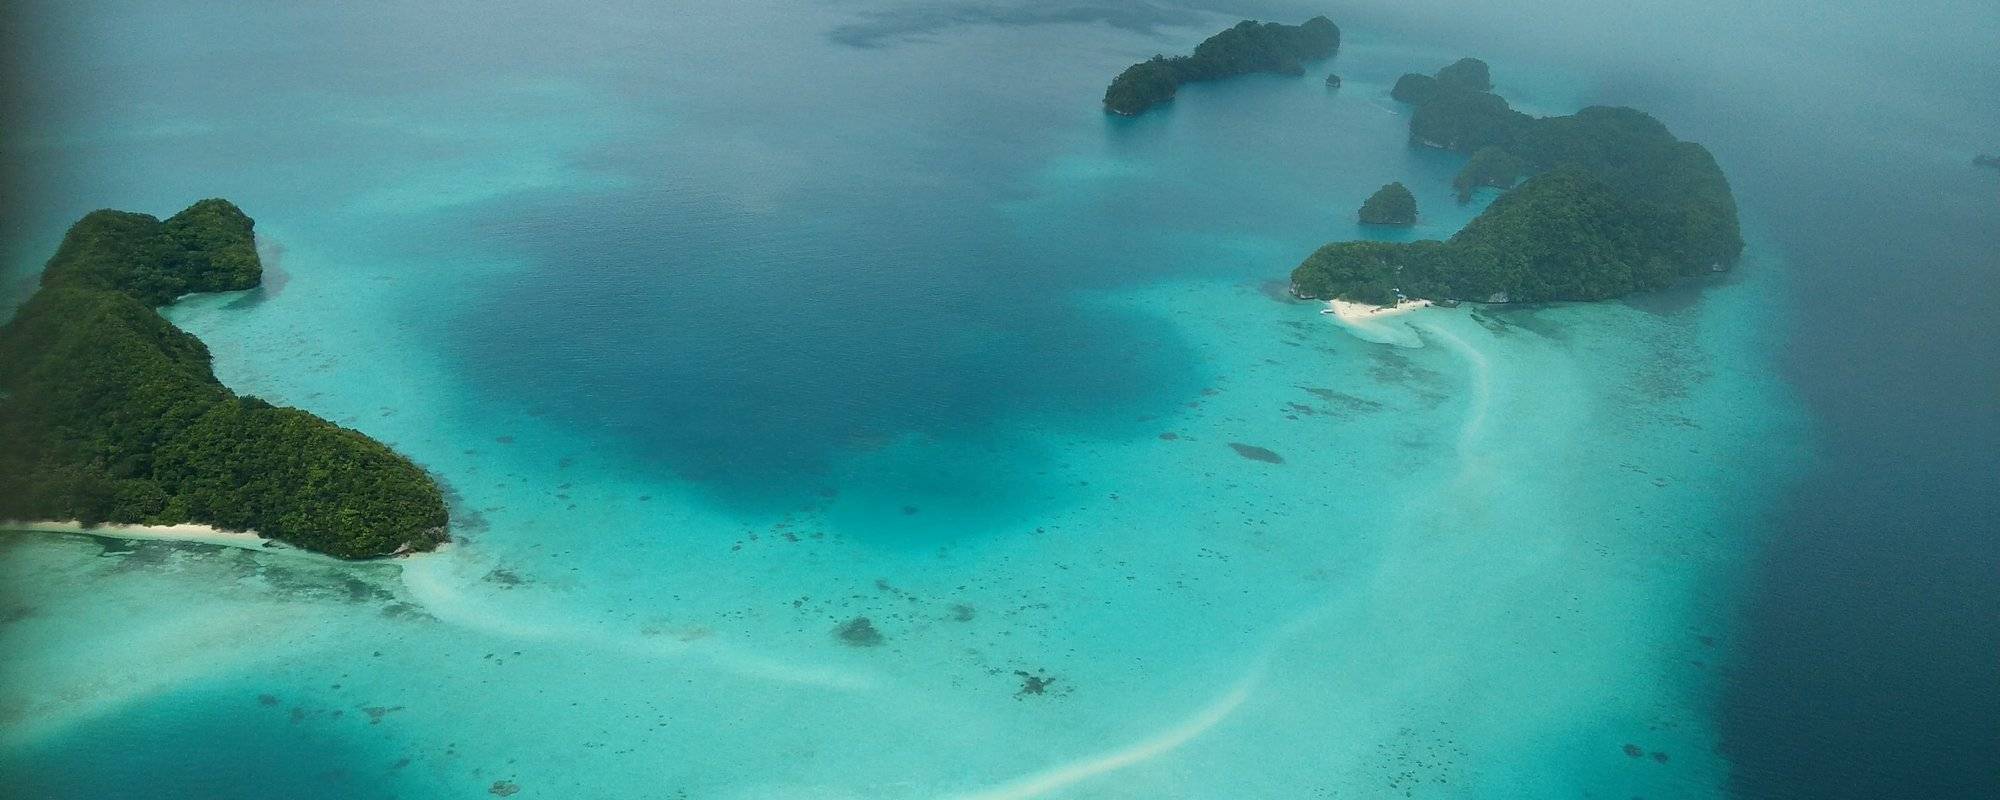 Disappearing Beaches: Palau vs. Fiji